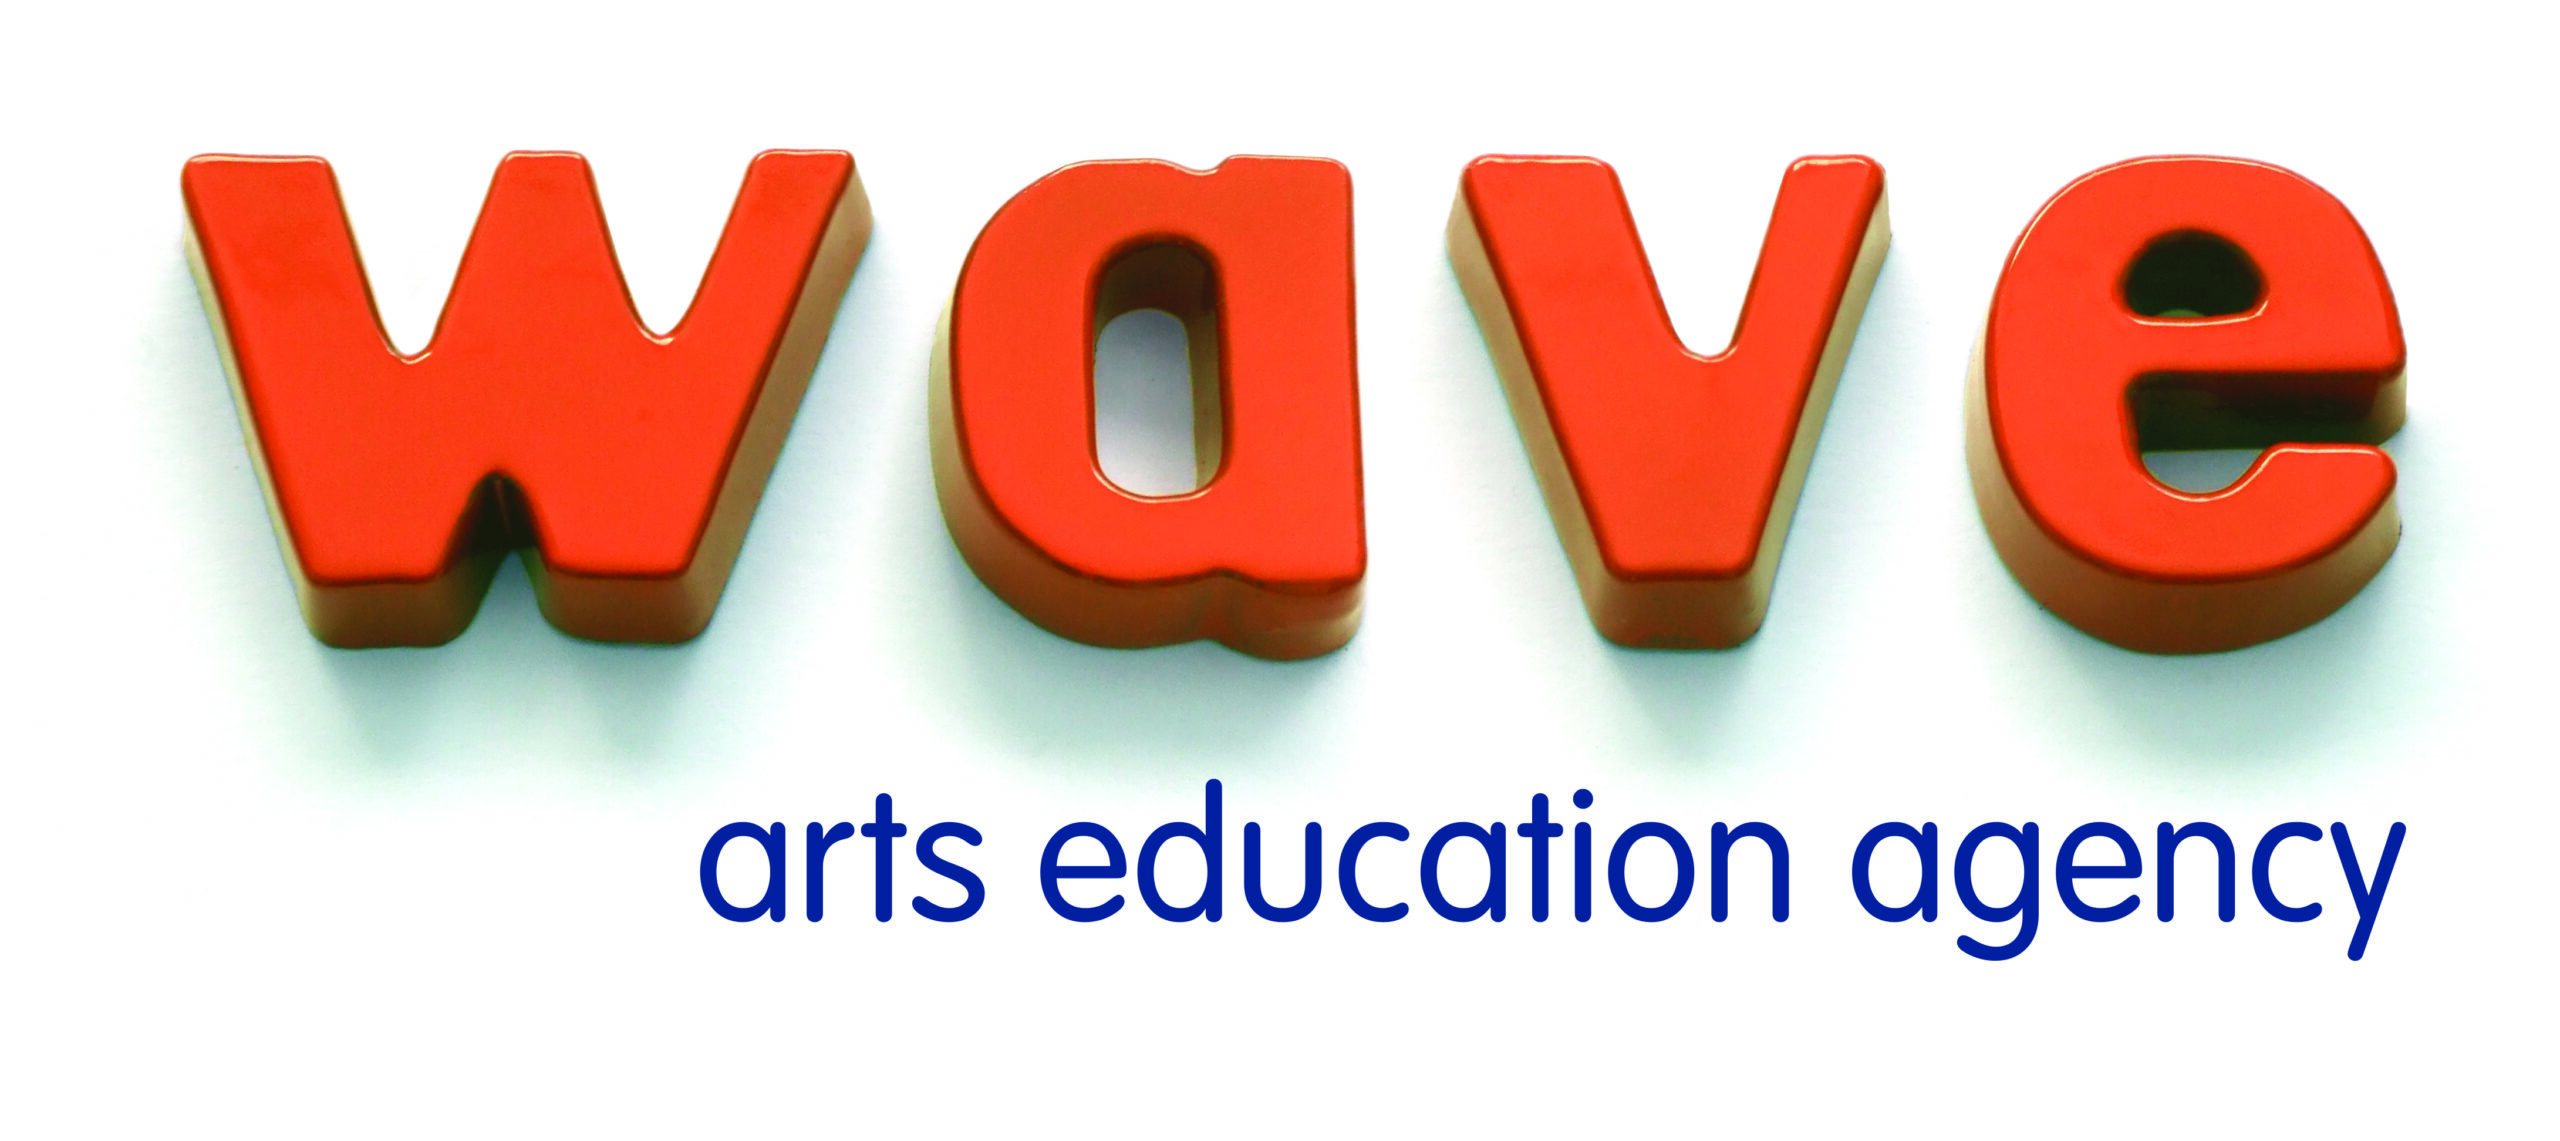 Wave Arts Education Agency Logo